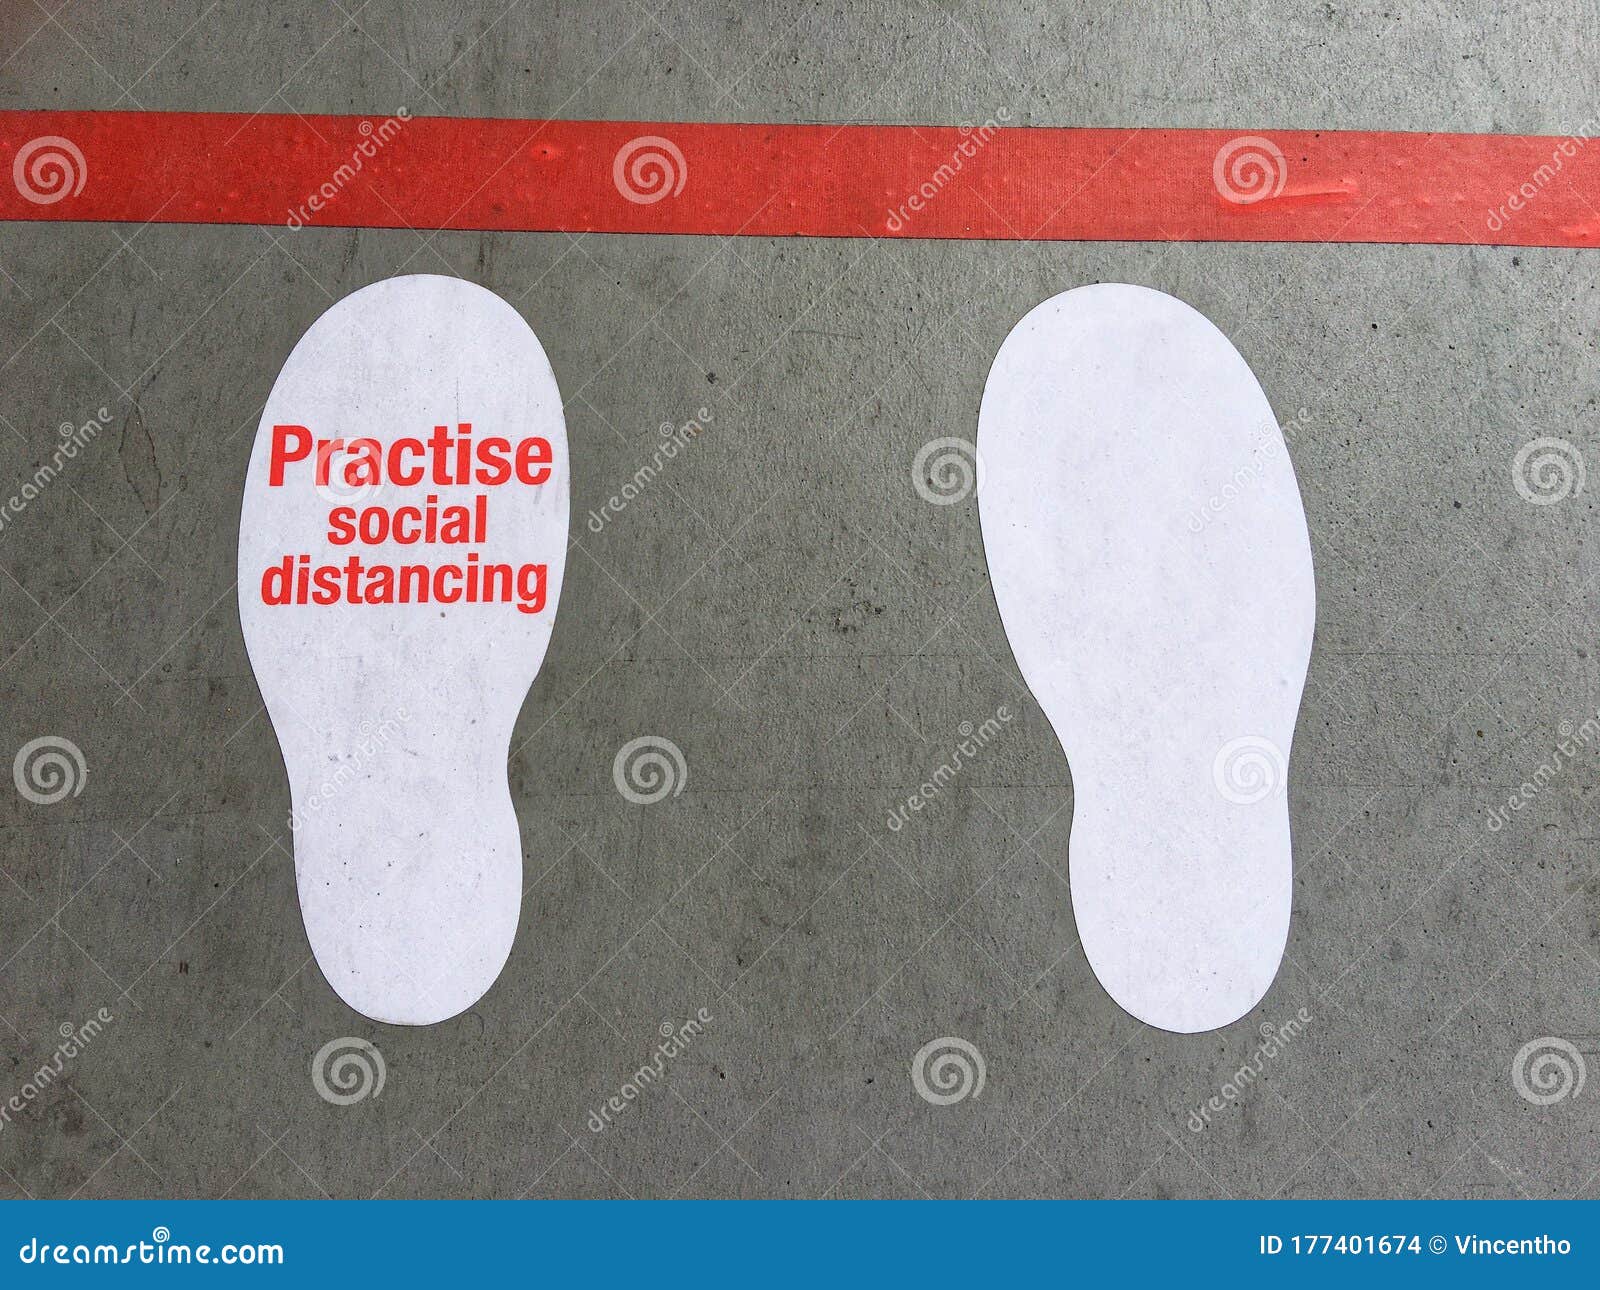 practice social distancing footsteps steps feet coronavirus covid 19 poster print